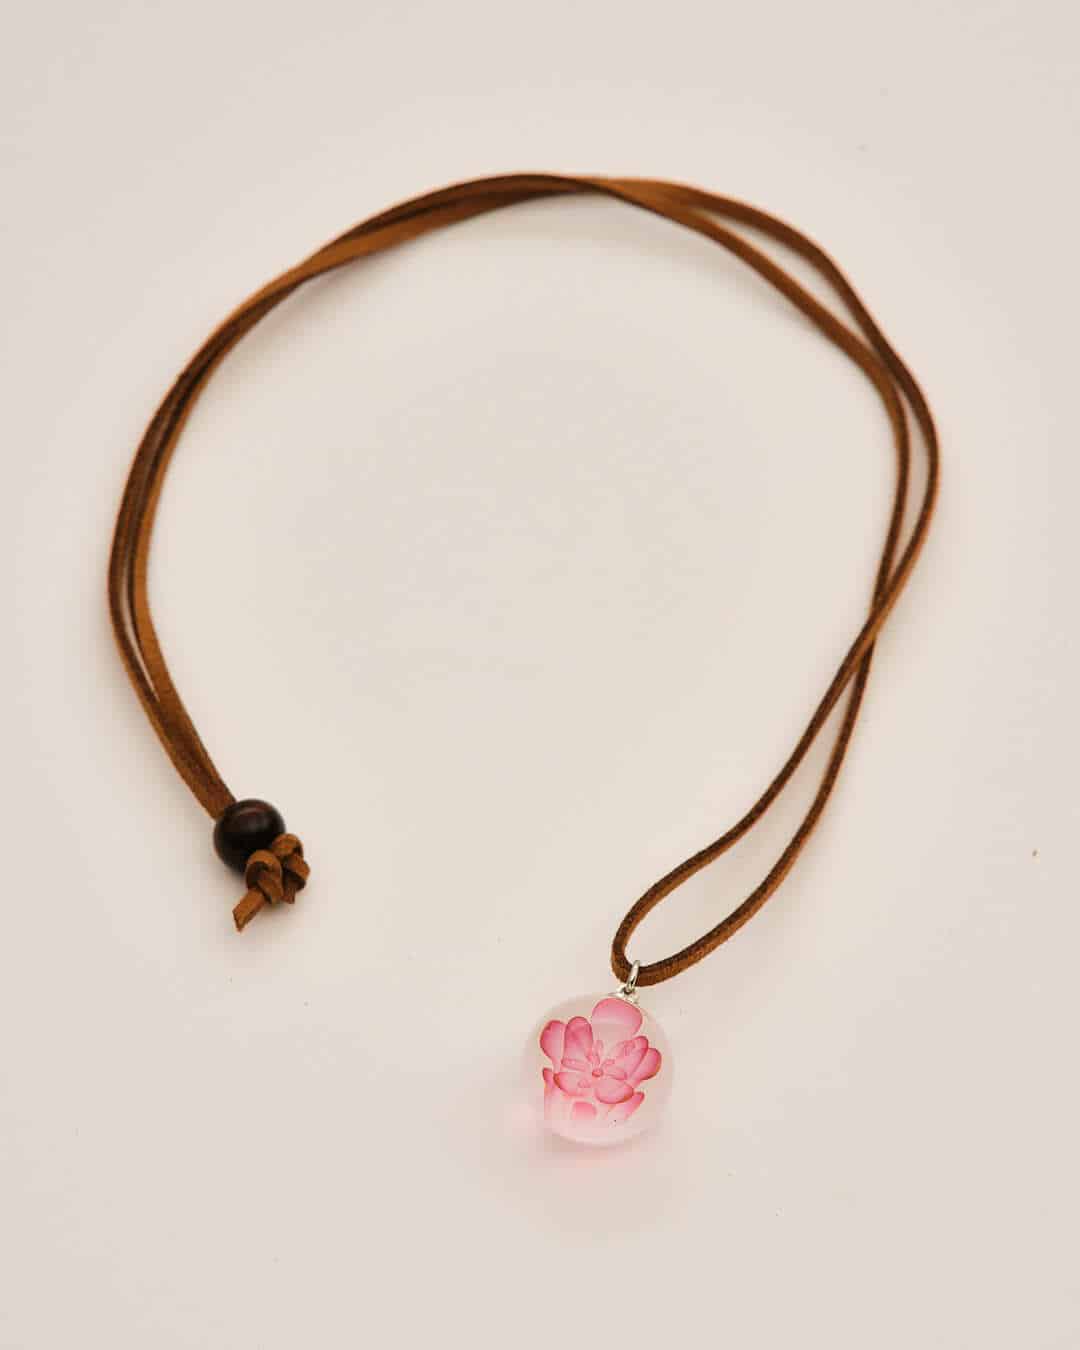 heady glass pendant - (CS4) Small White Cherry Blossom Pendant by ColorWorks